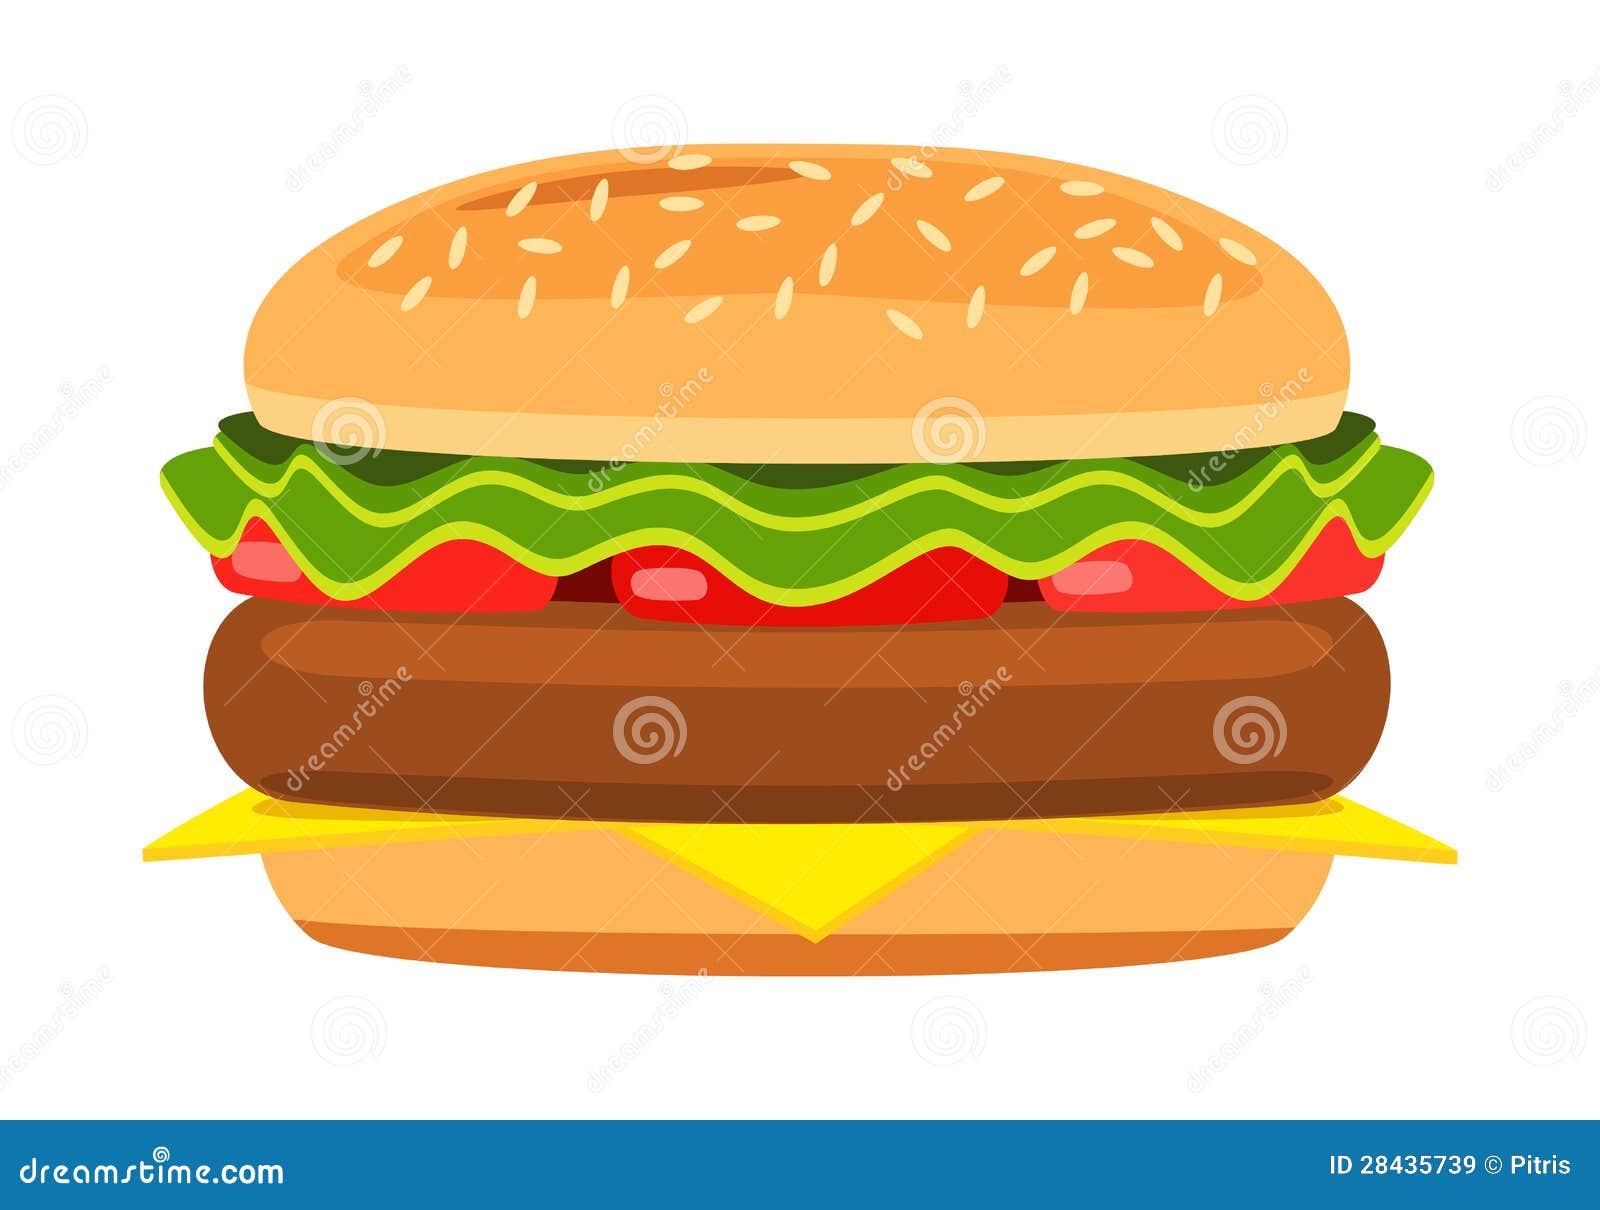 Cartoon Hamburger Royalty Free Stock Images - Image: 28435739